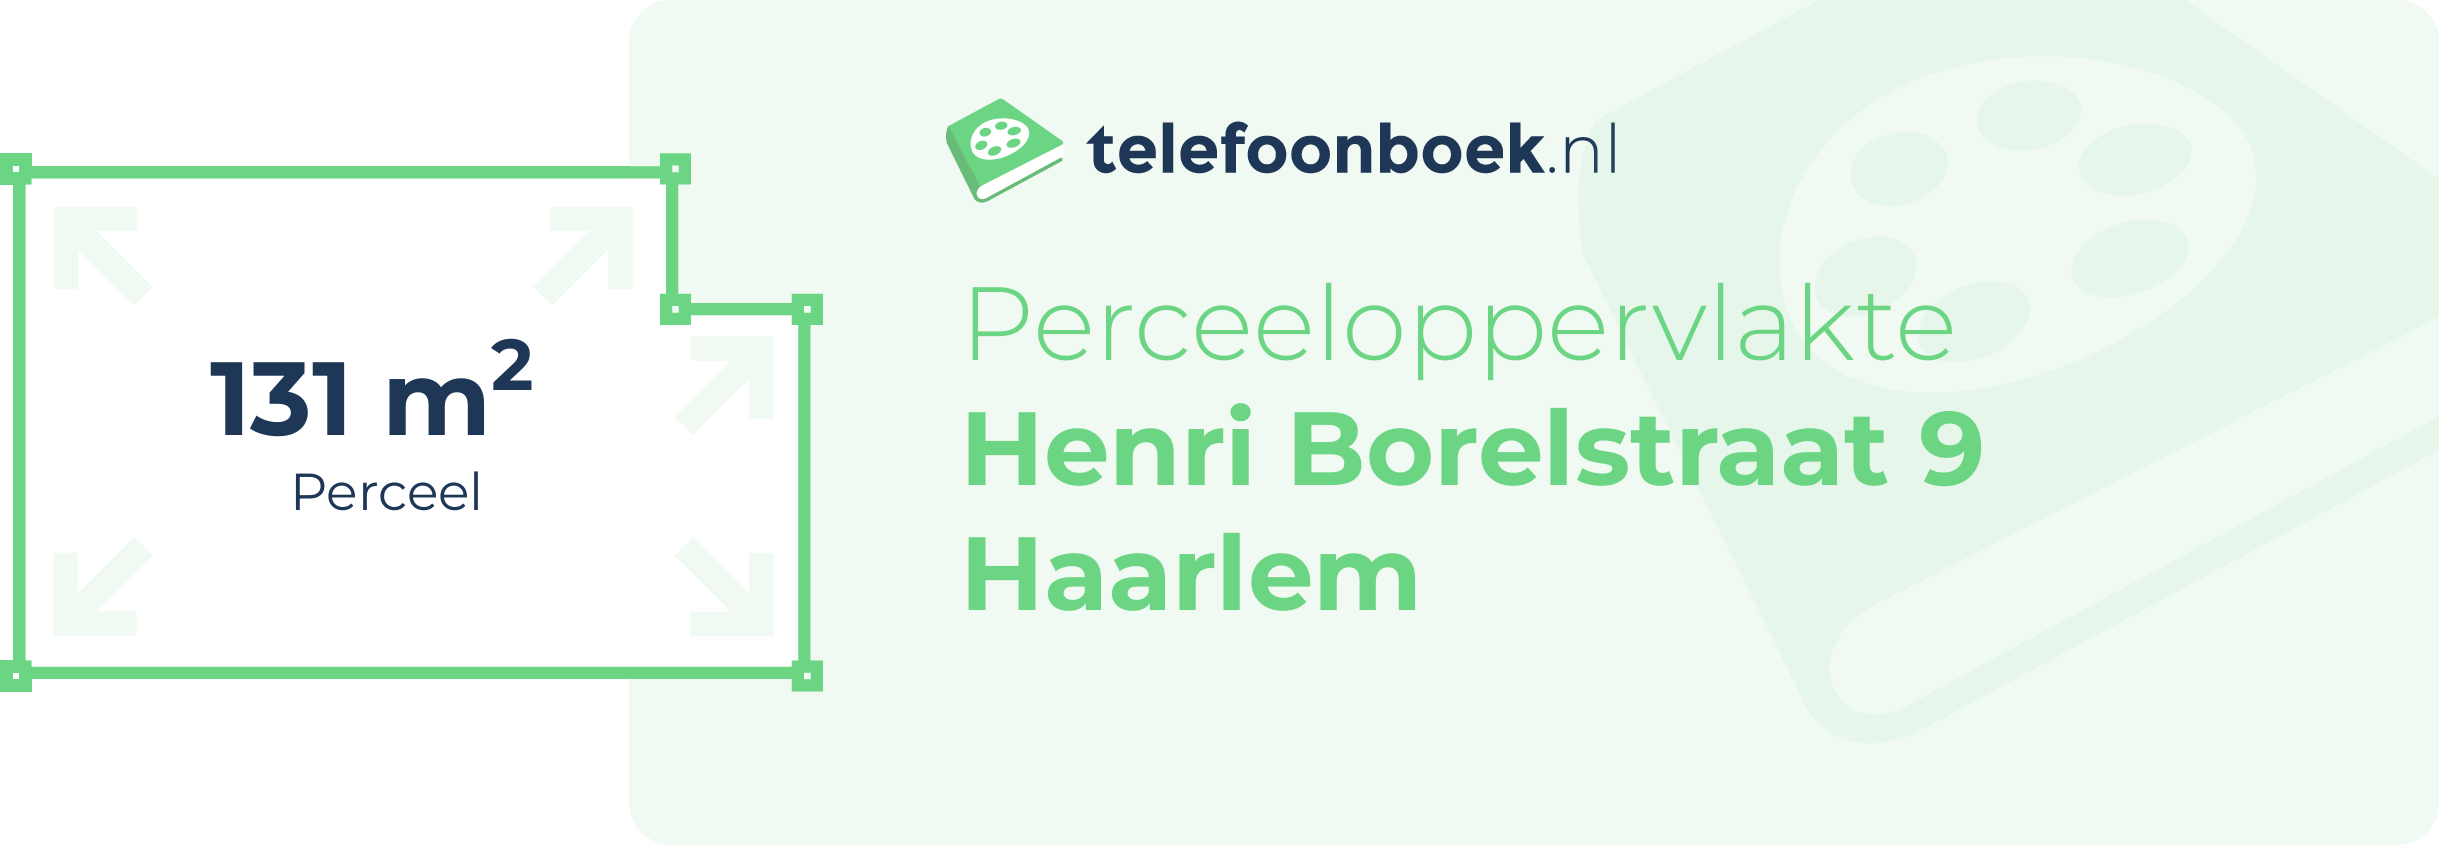 Perceeloppervlakte Henri Borelstraat 9 Haarlem